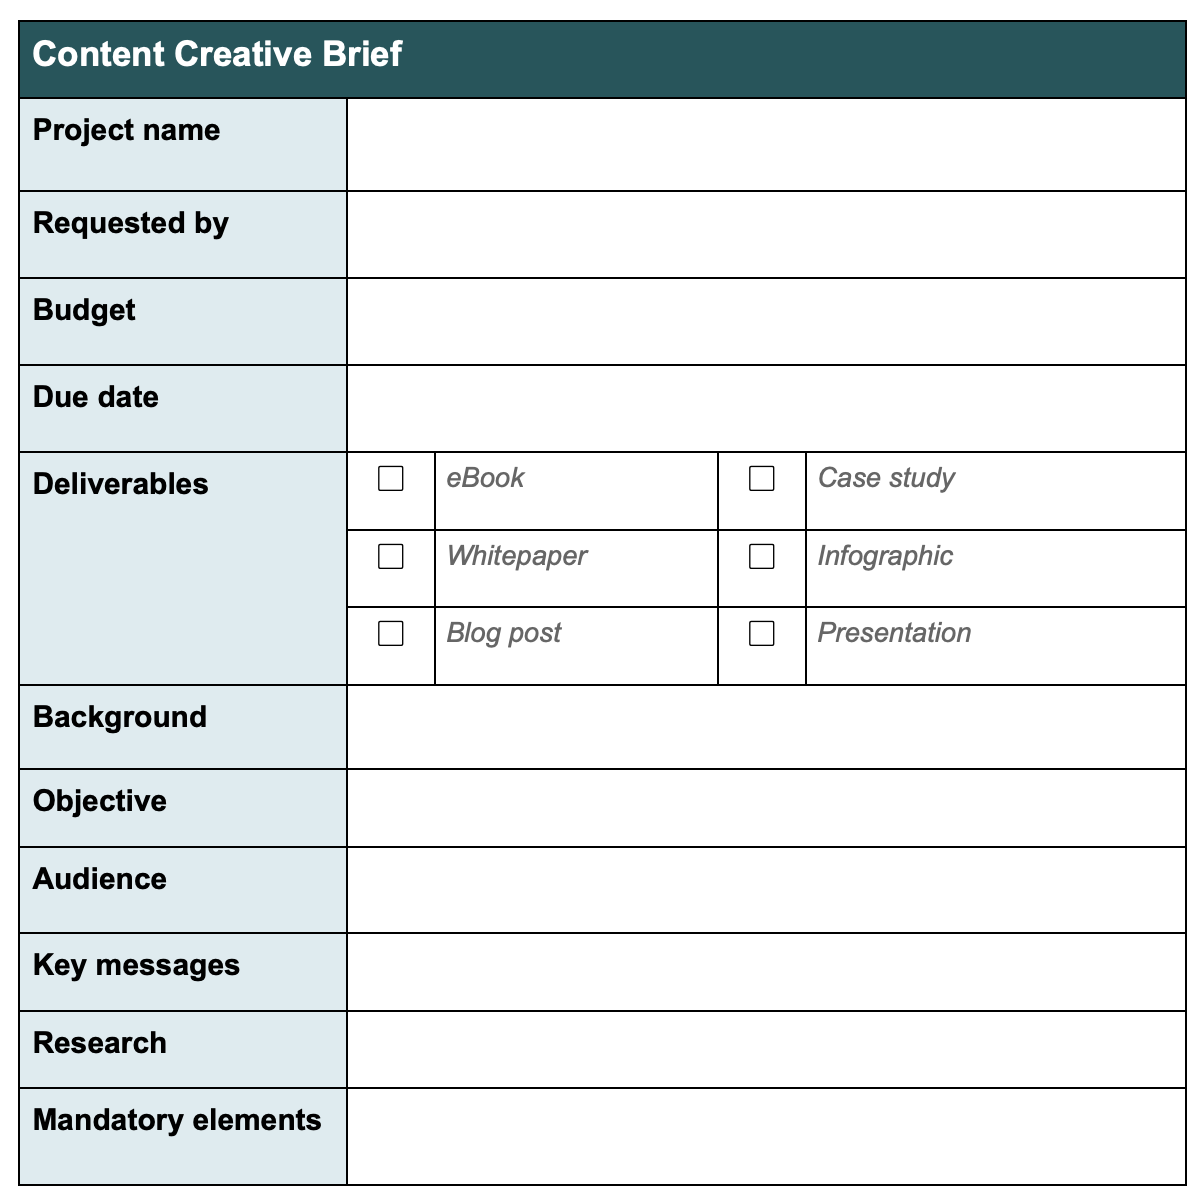 Content creative brief template